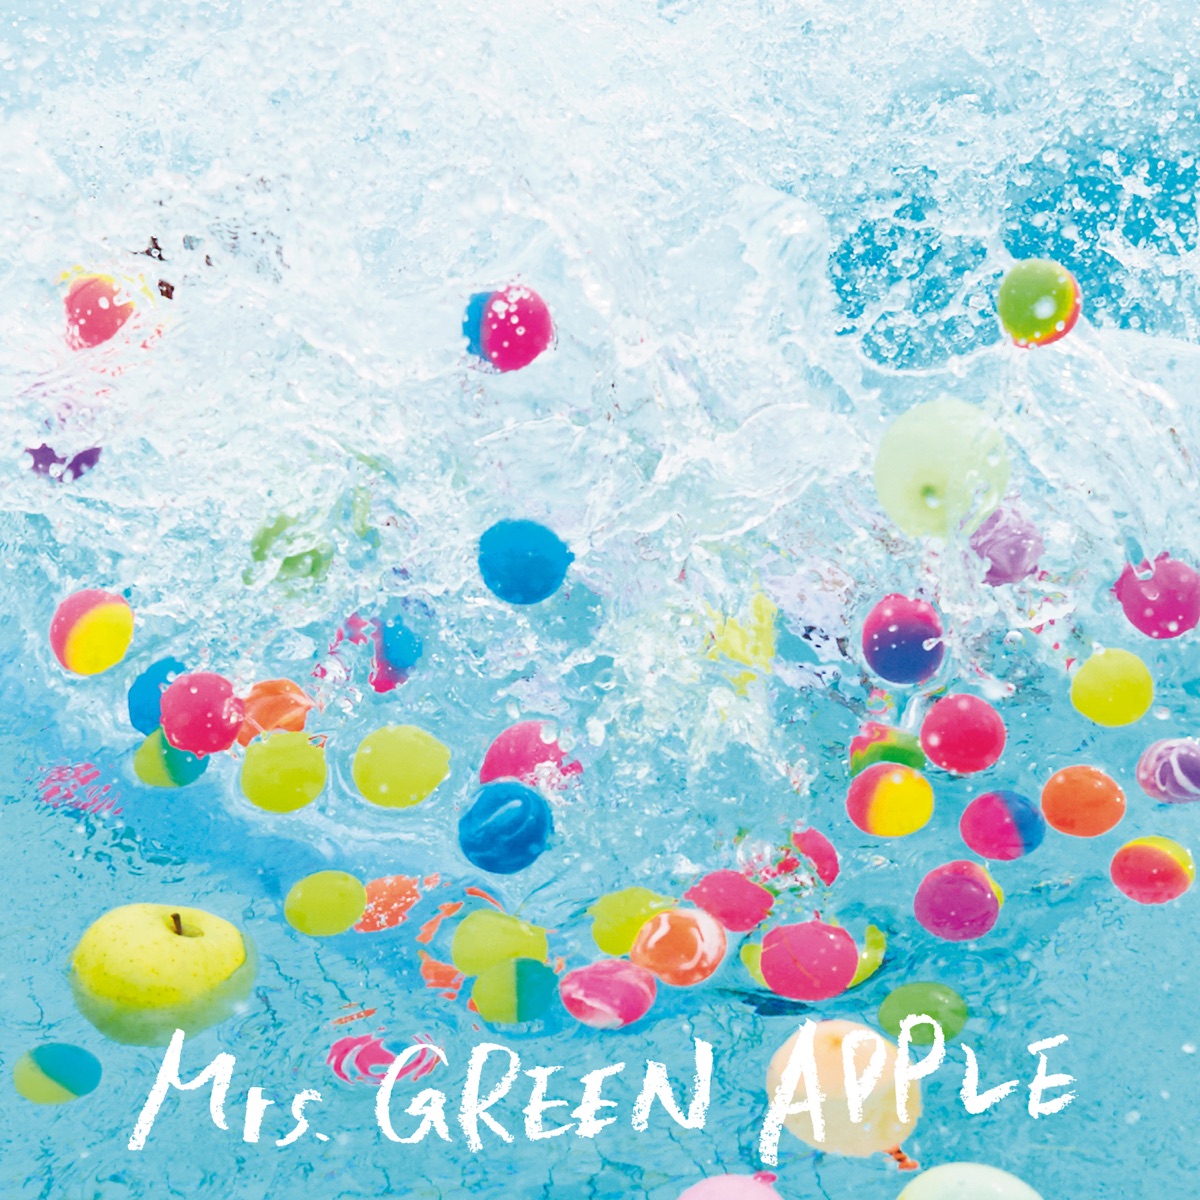 Mrs. GREEN APPLE - Mrs. GREEN APPLEのアルバム - Apple Music